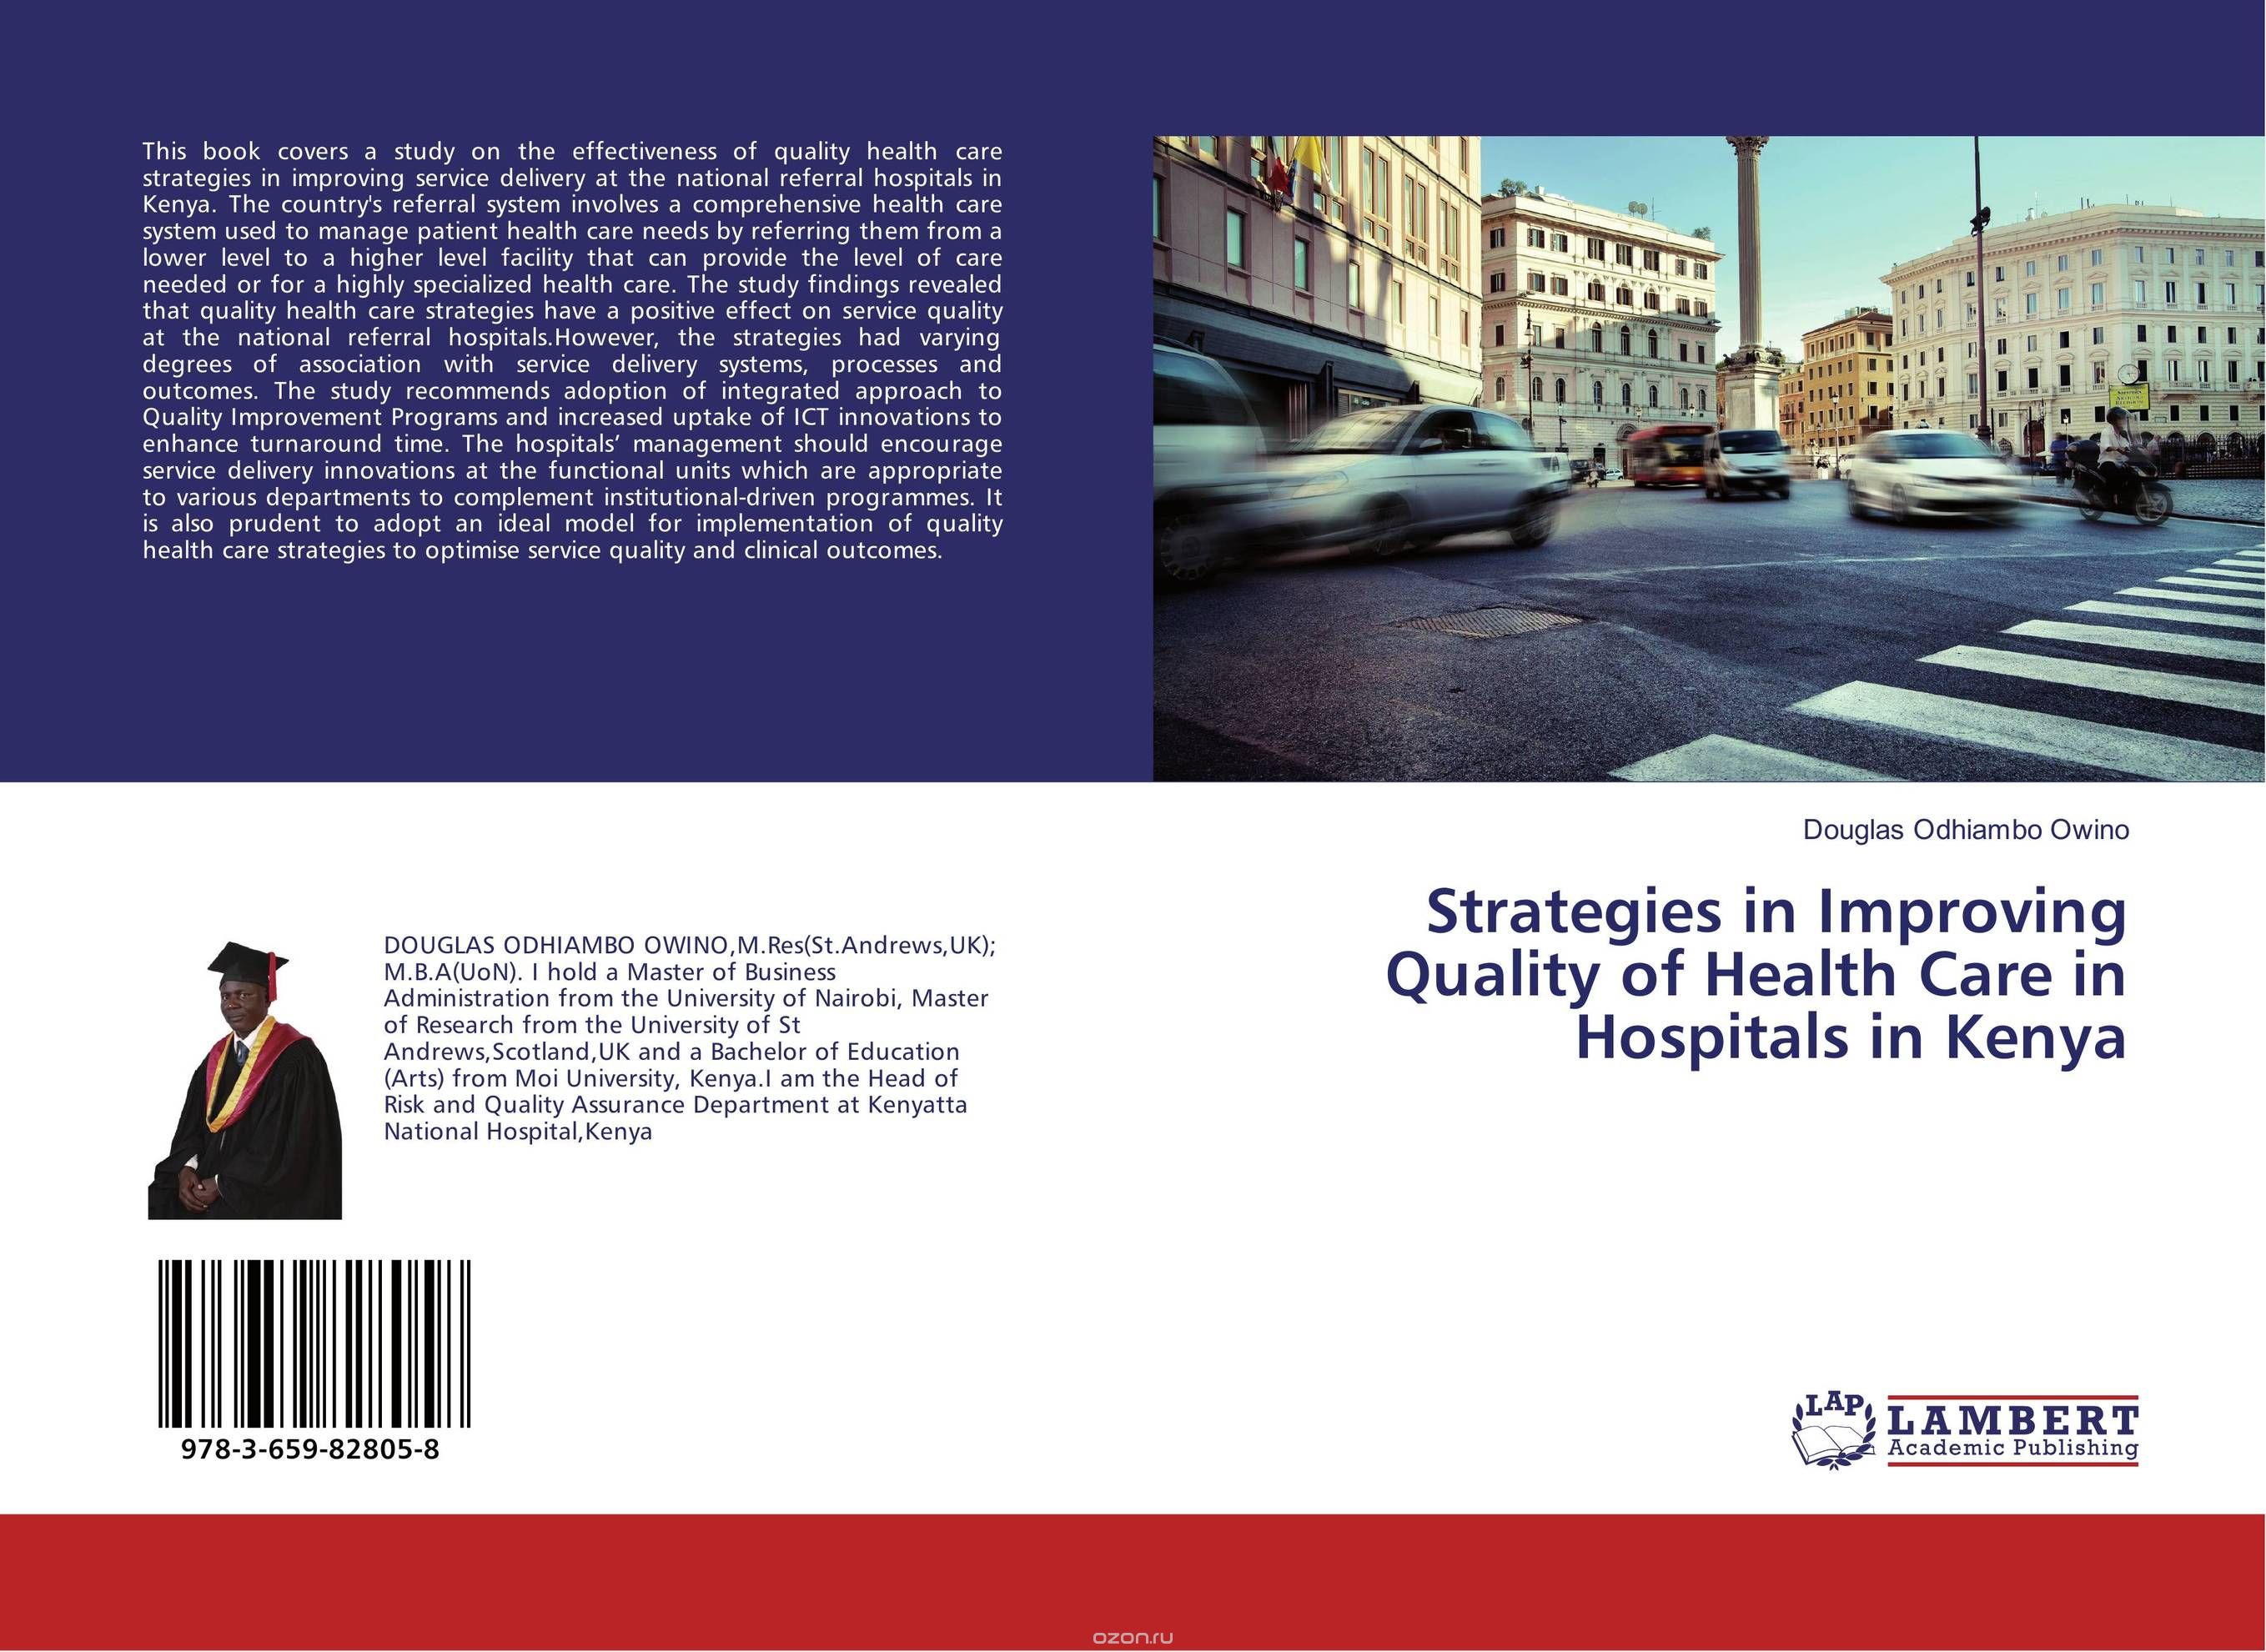 Скачать книгу "Strategies in Improving Quality of Health Care in Hospitals in Kenya"